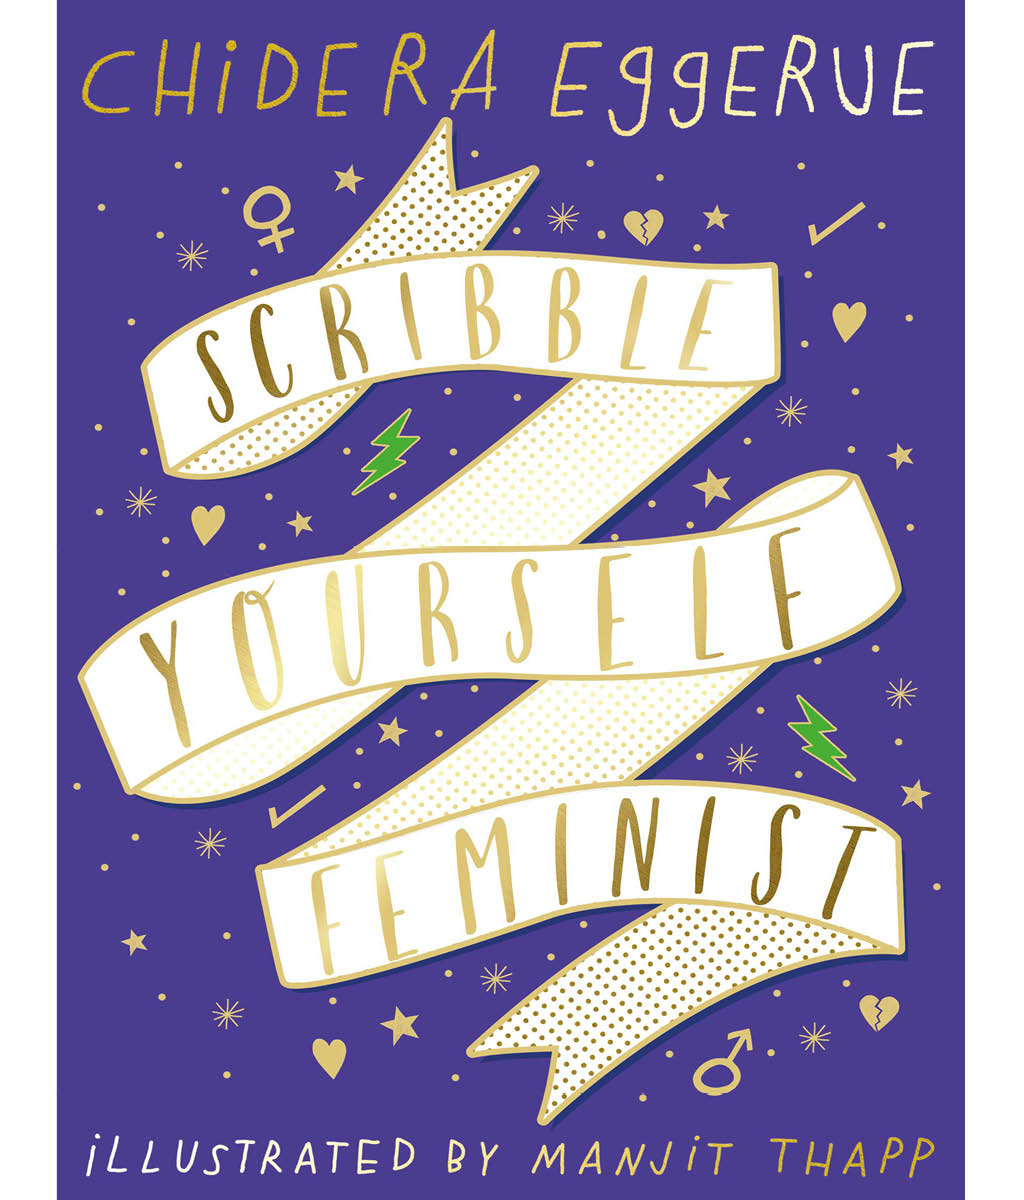 Scribble Yourself Feminist Chidera Eggerue